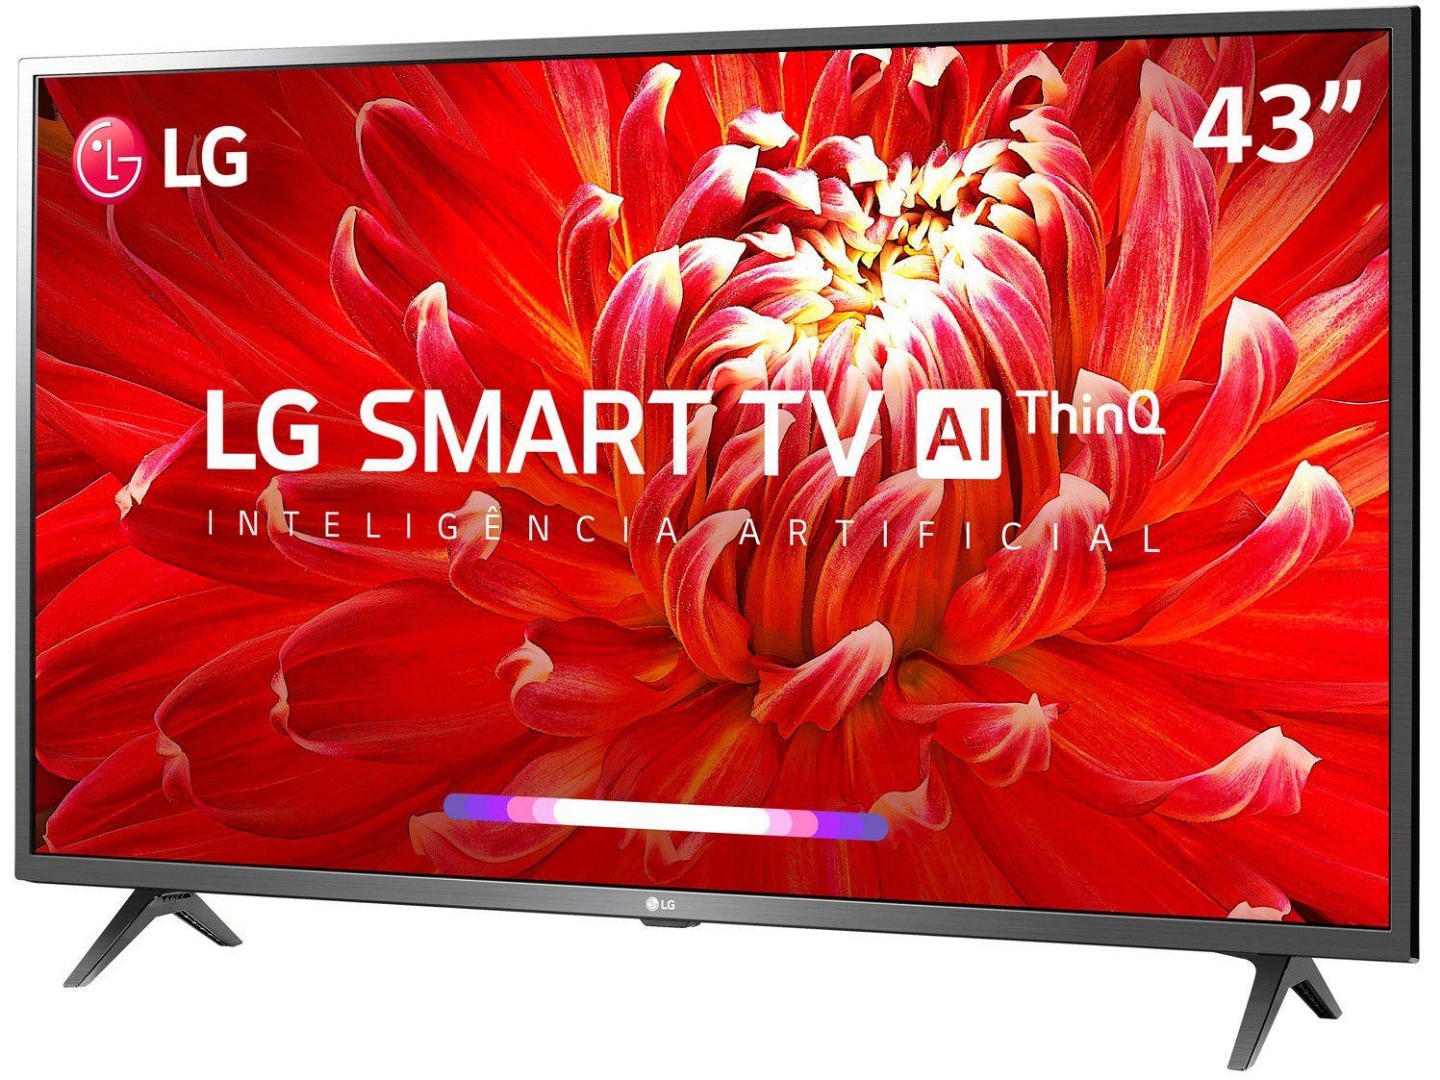 Smart Tv LG Al Thinq 43